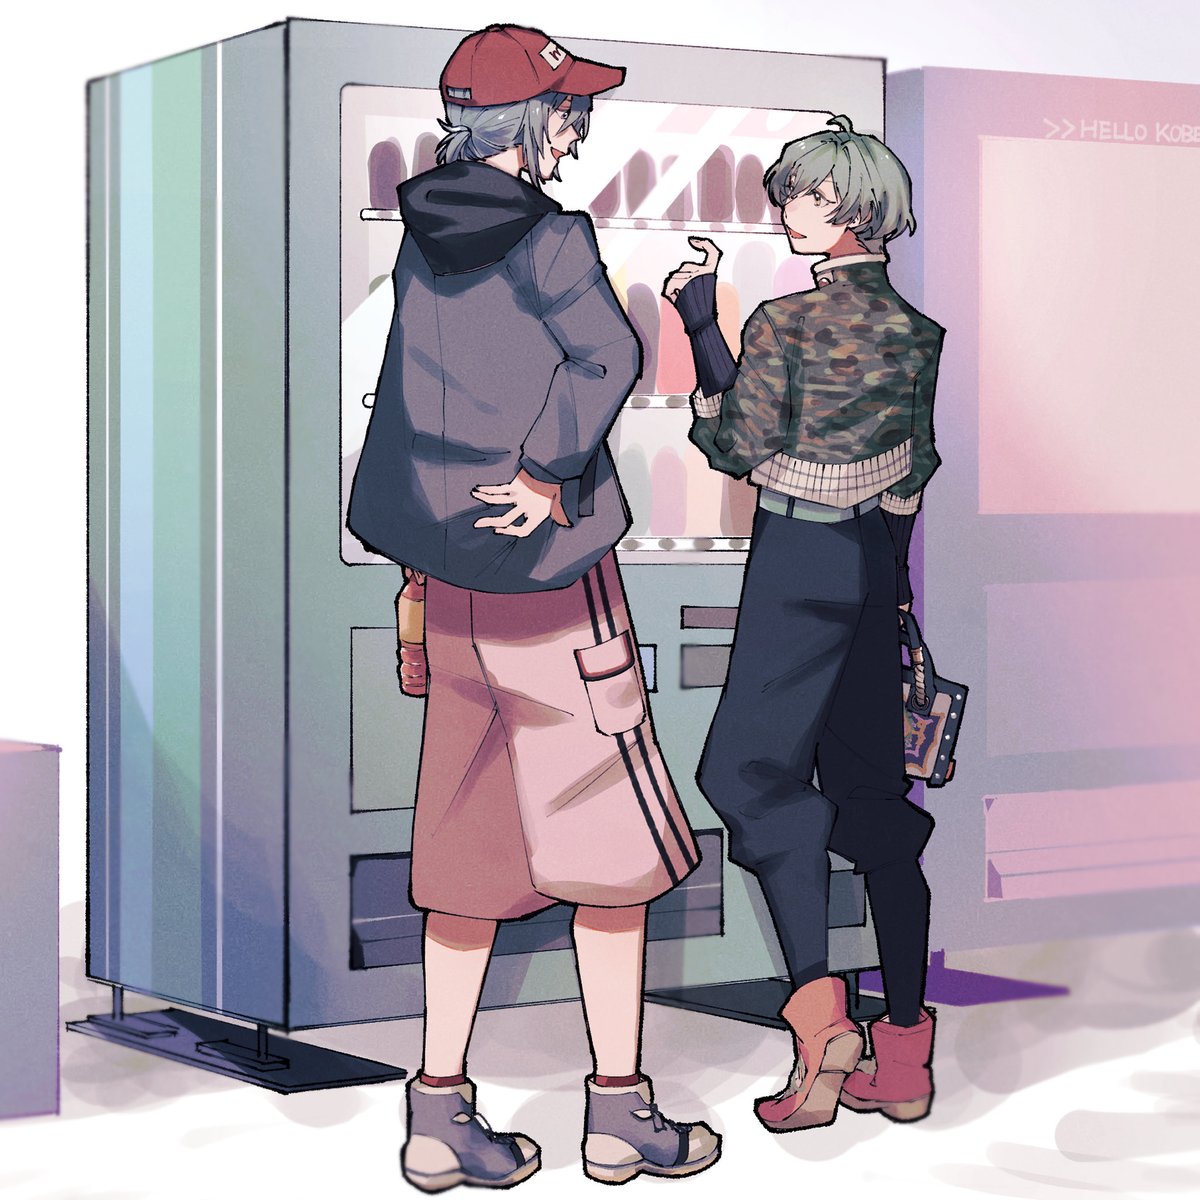 hat vending machine jacket 2boys grey hair camouflage multiple boys  illustration images